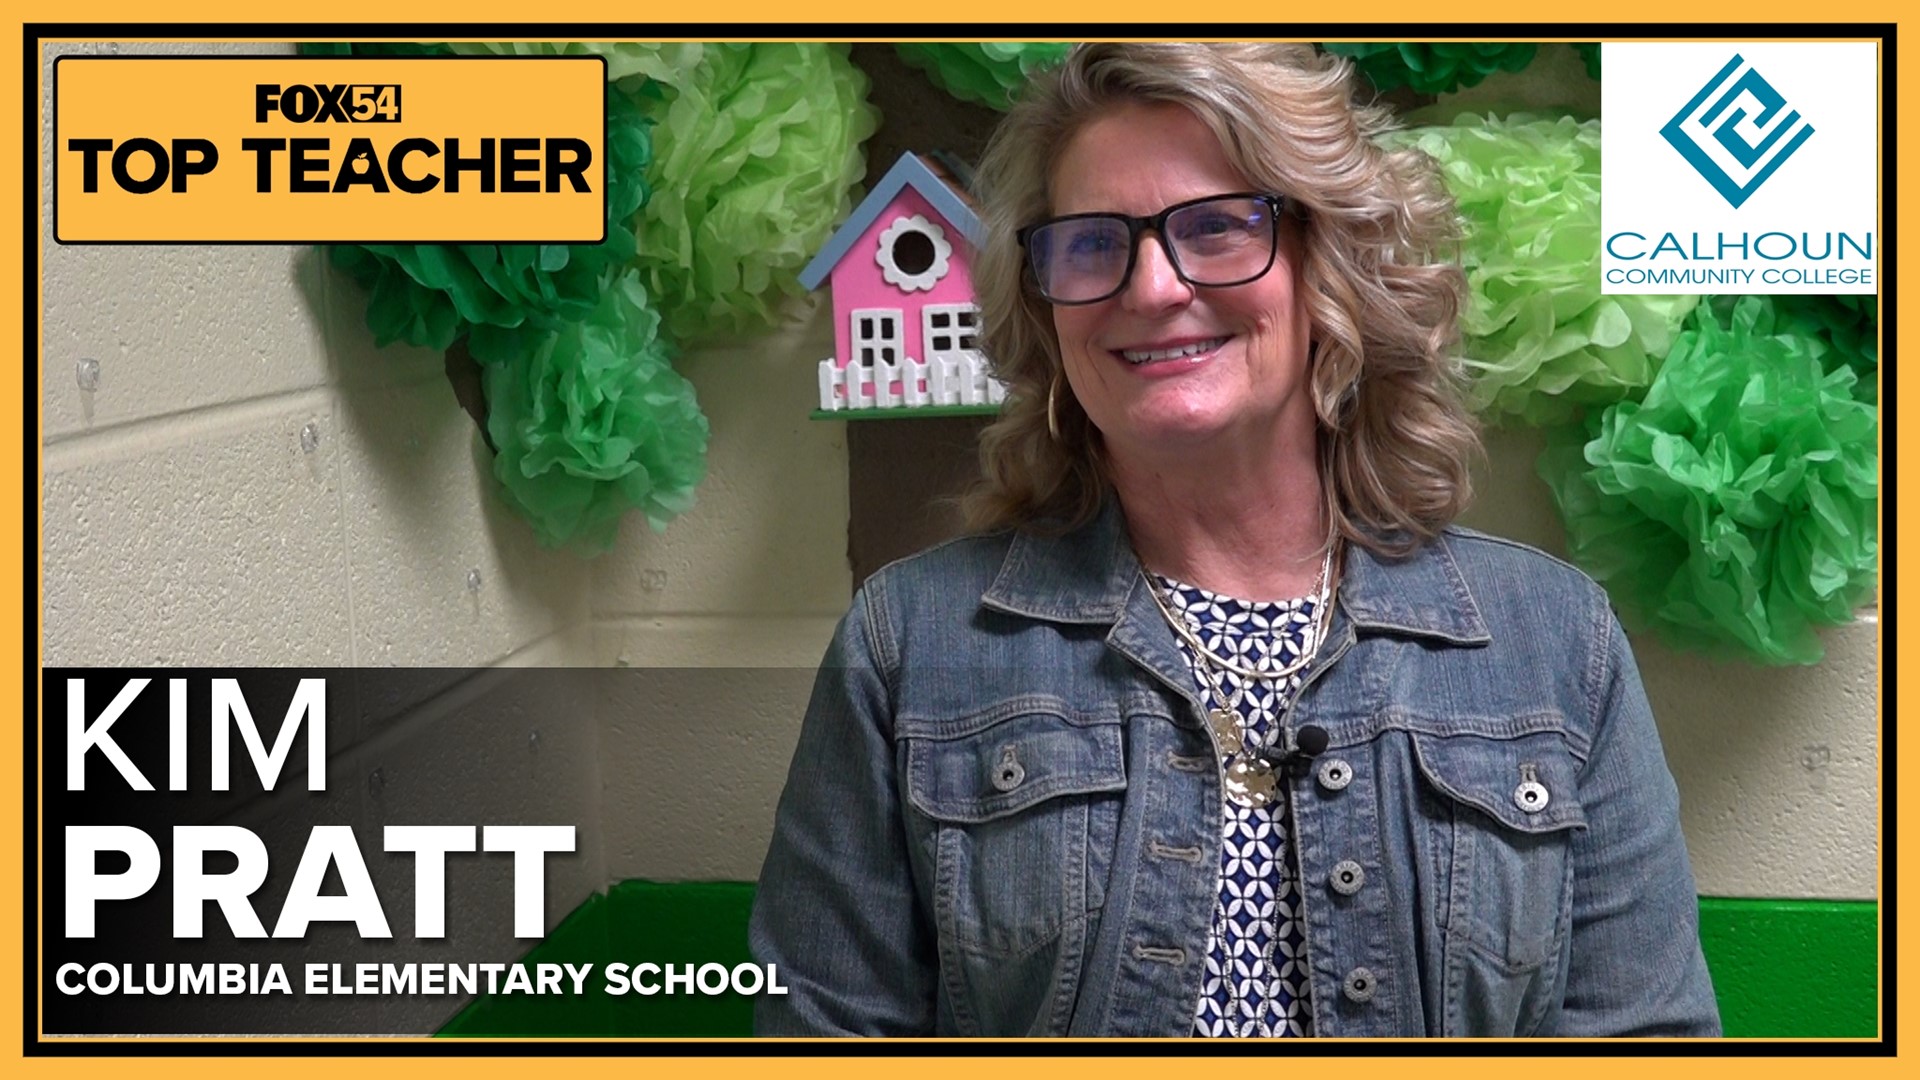 Kim Pratt is an inspiration to her students!